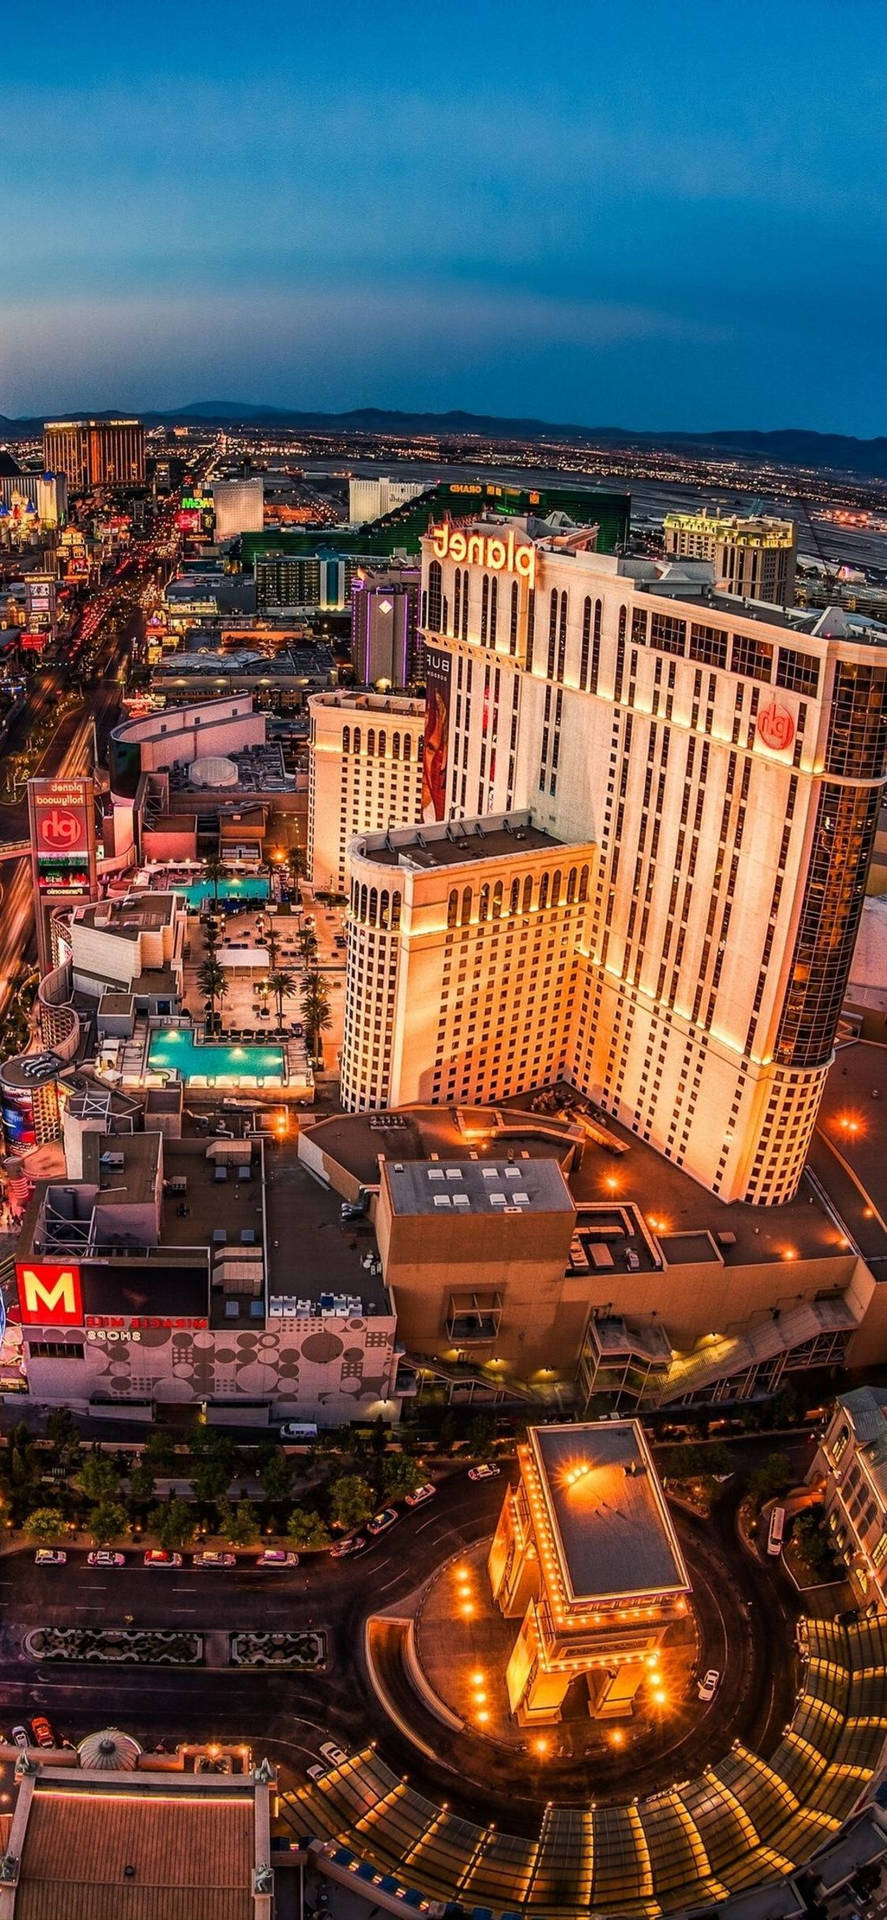 Planet Hollywood Las Vegas Resort Casino Iphone Wallpaper